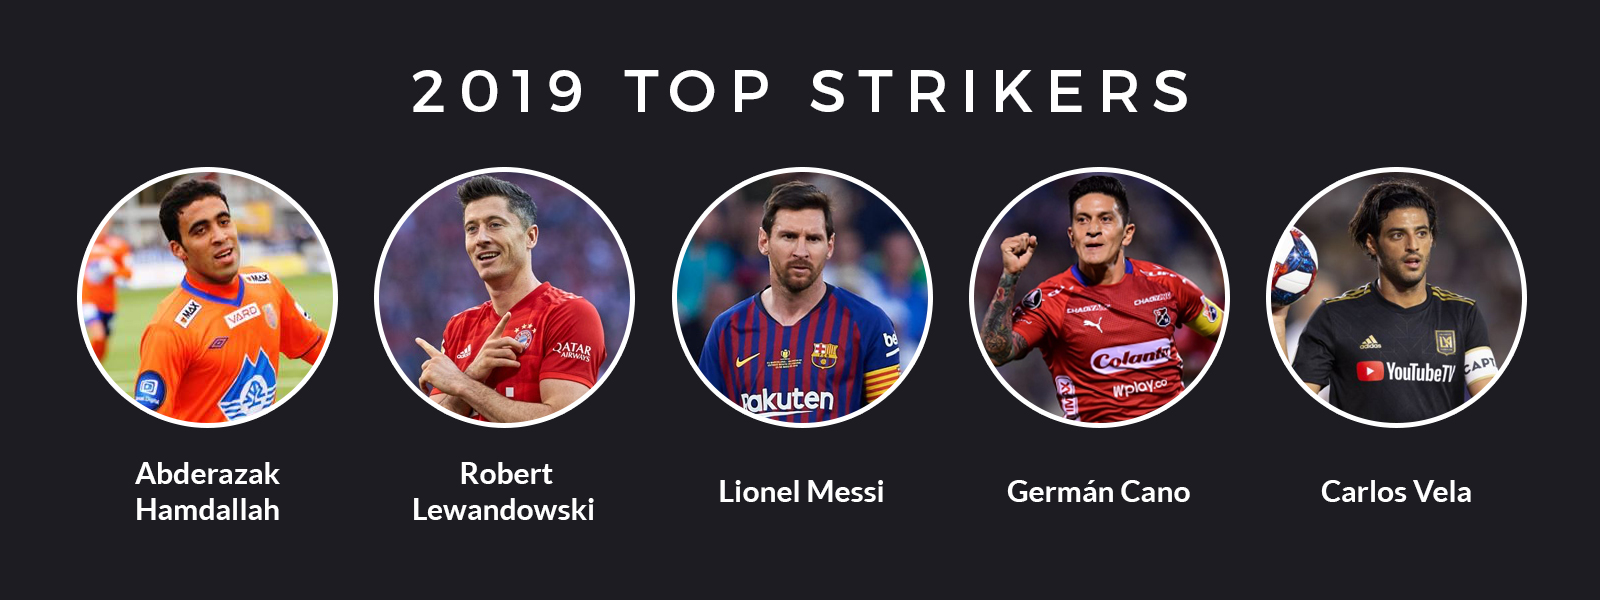 2019 World Top Strikers